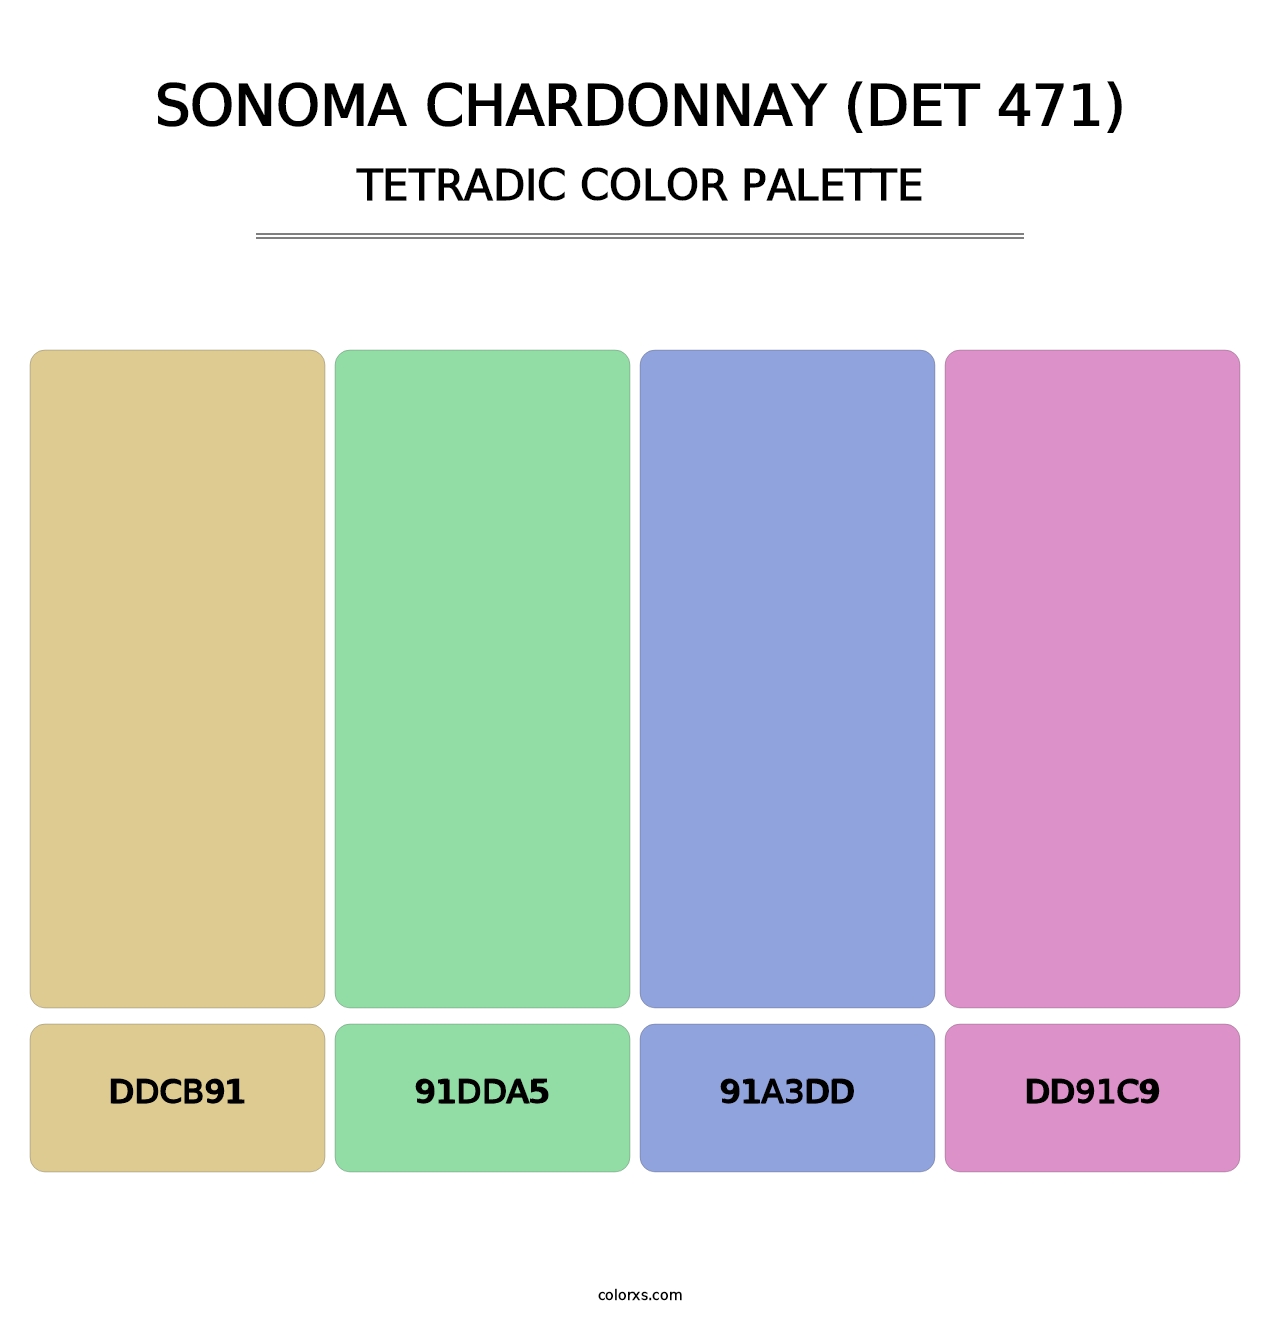 Sonoma Chardonnay (DET 471) - Tetradic Color Palette